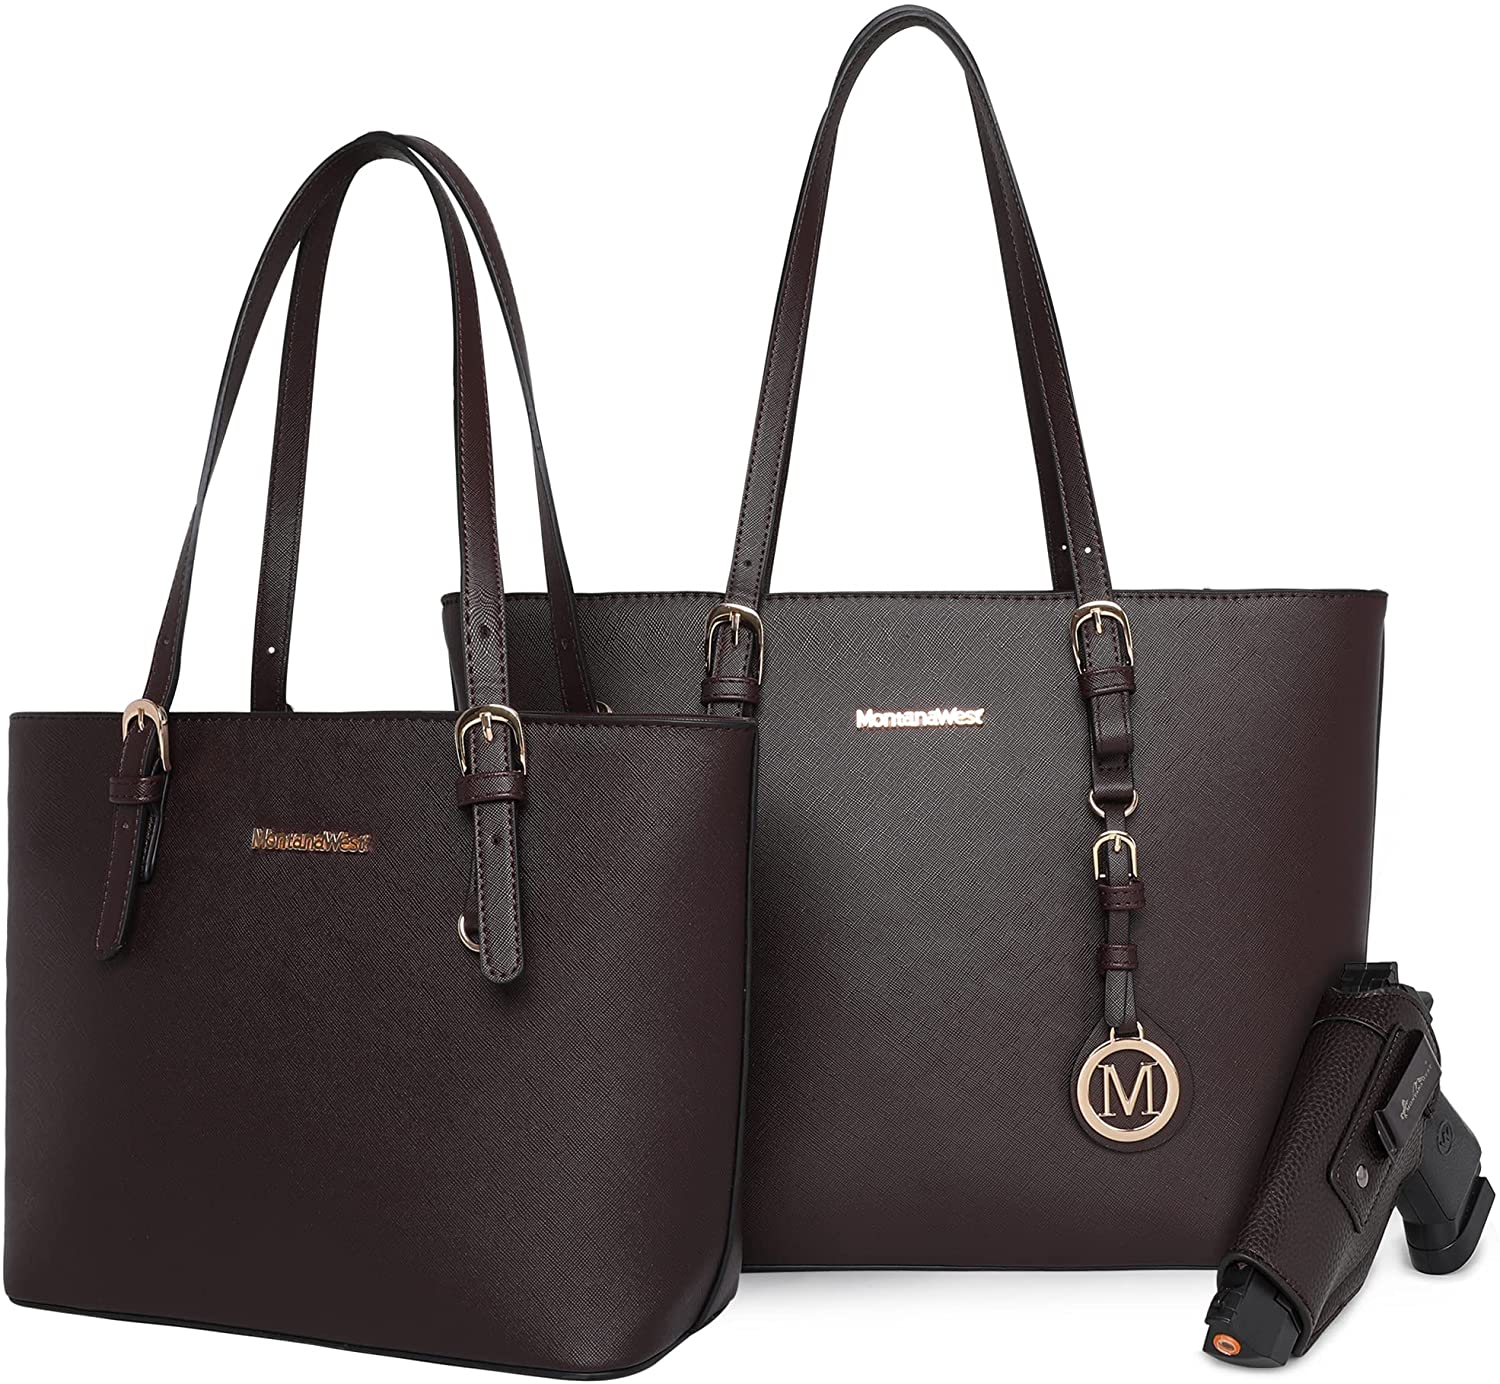 2pcs Women's Handbag Set, Large Capacity Tote Bag And Fashionable